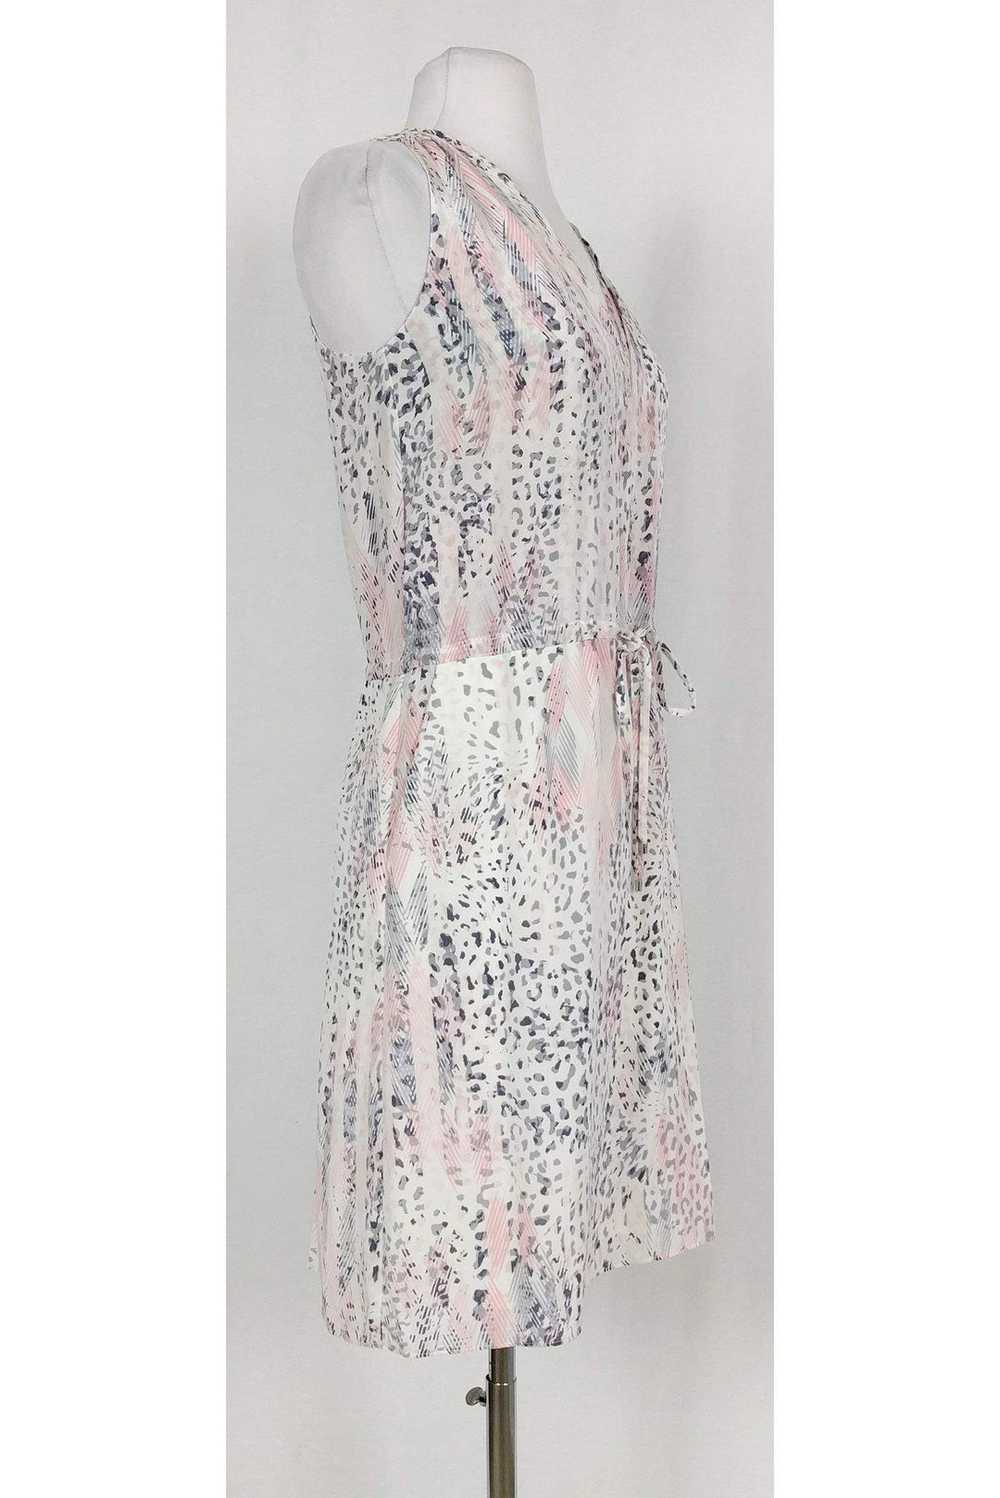 Rebecca Taylor - Pink & Grey Animal Print Dress S… - image 2